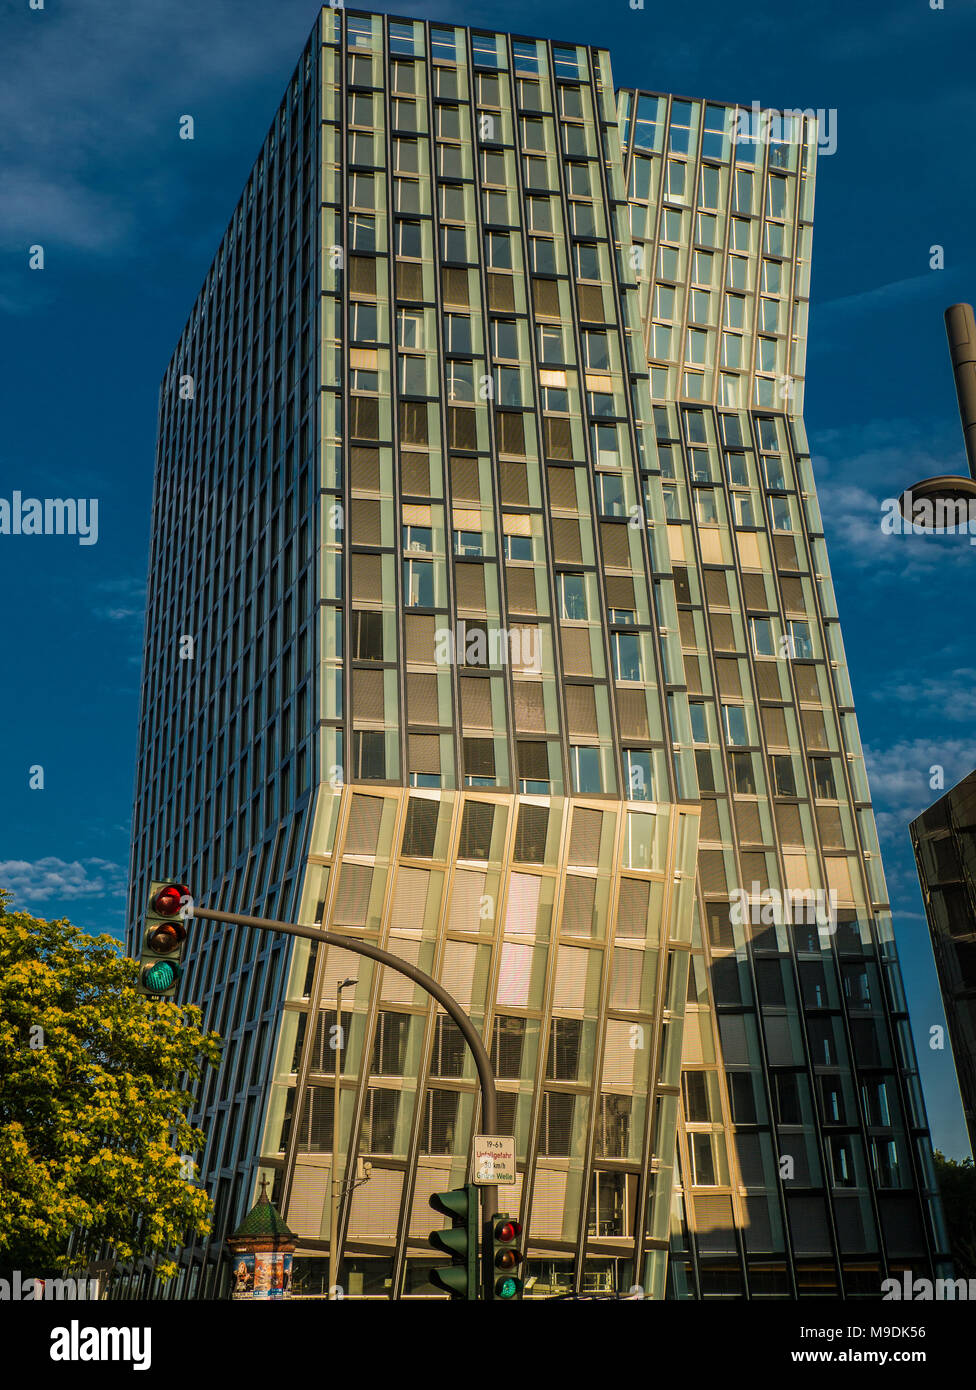 Dancing Towers On The Reeperbahn In Hamburg Germany Stock Photo Alamy